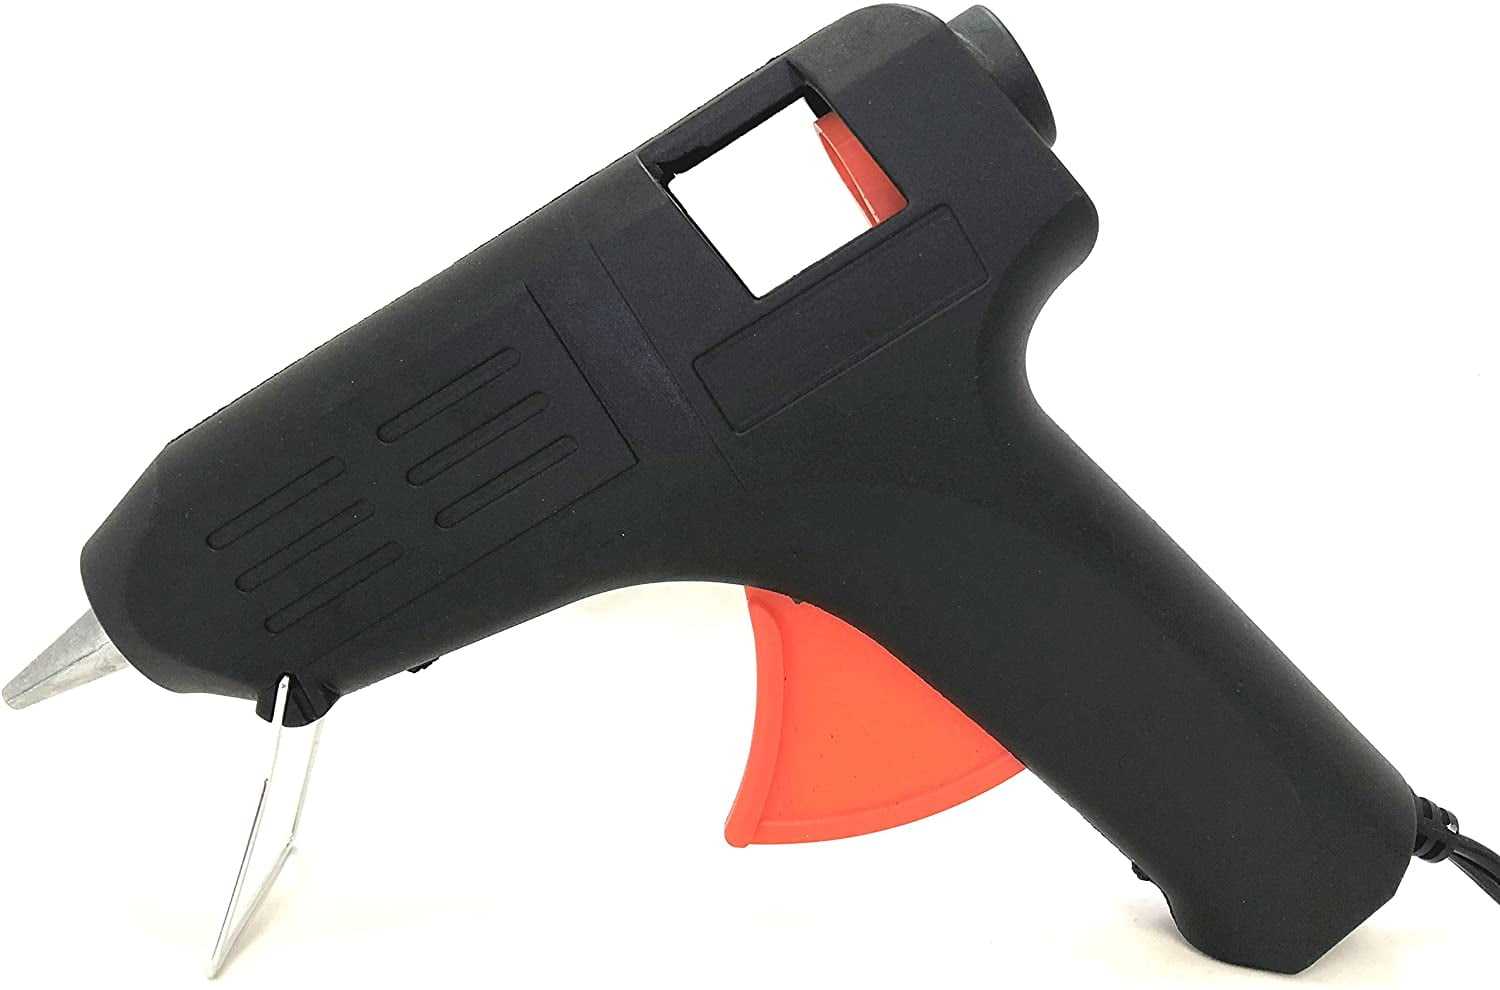 Costyle High-Temp Hot Melt Glue Gun w/ 10 Count Glue Sticks, Black 